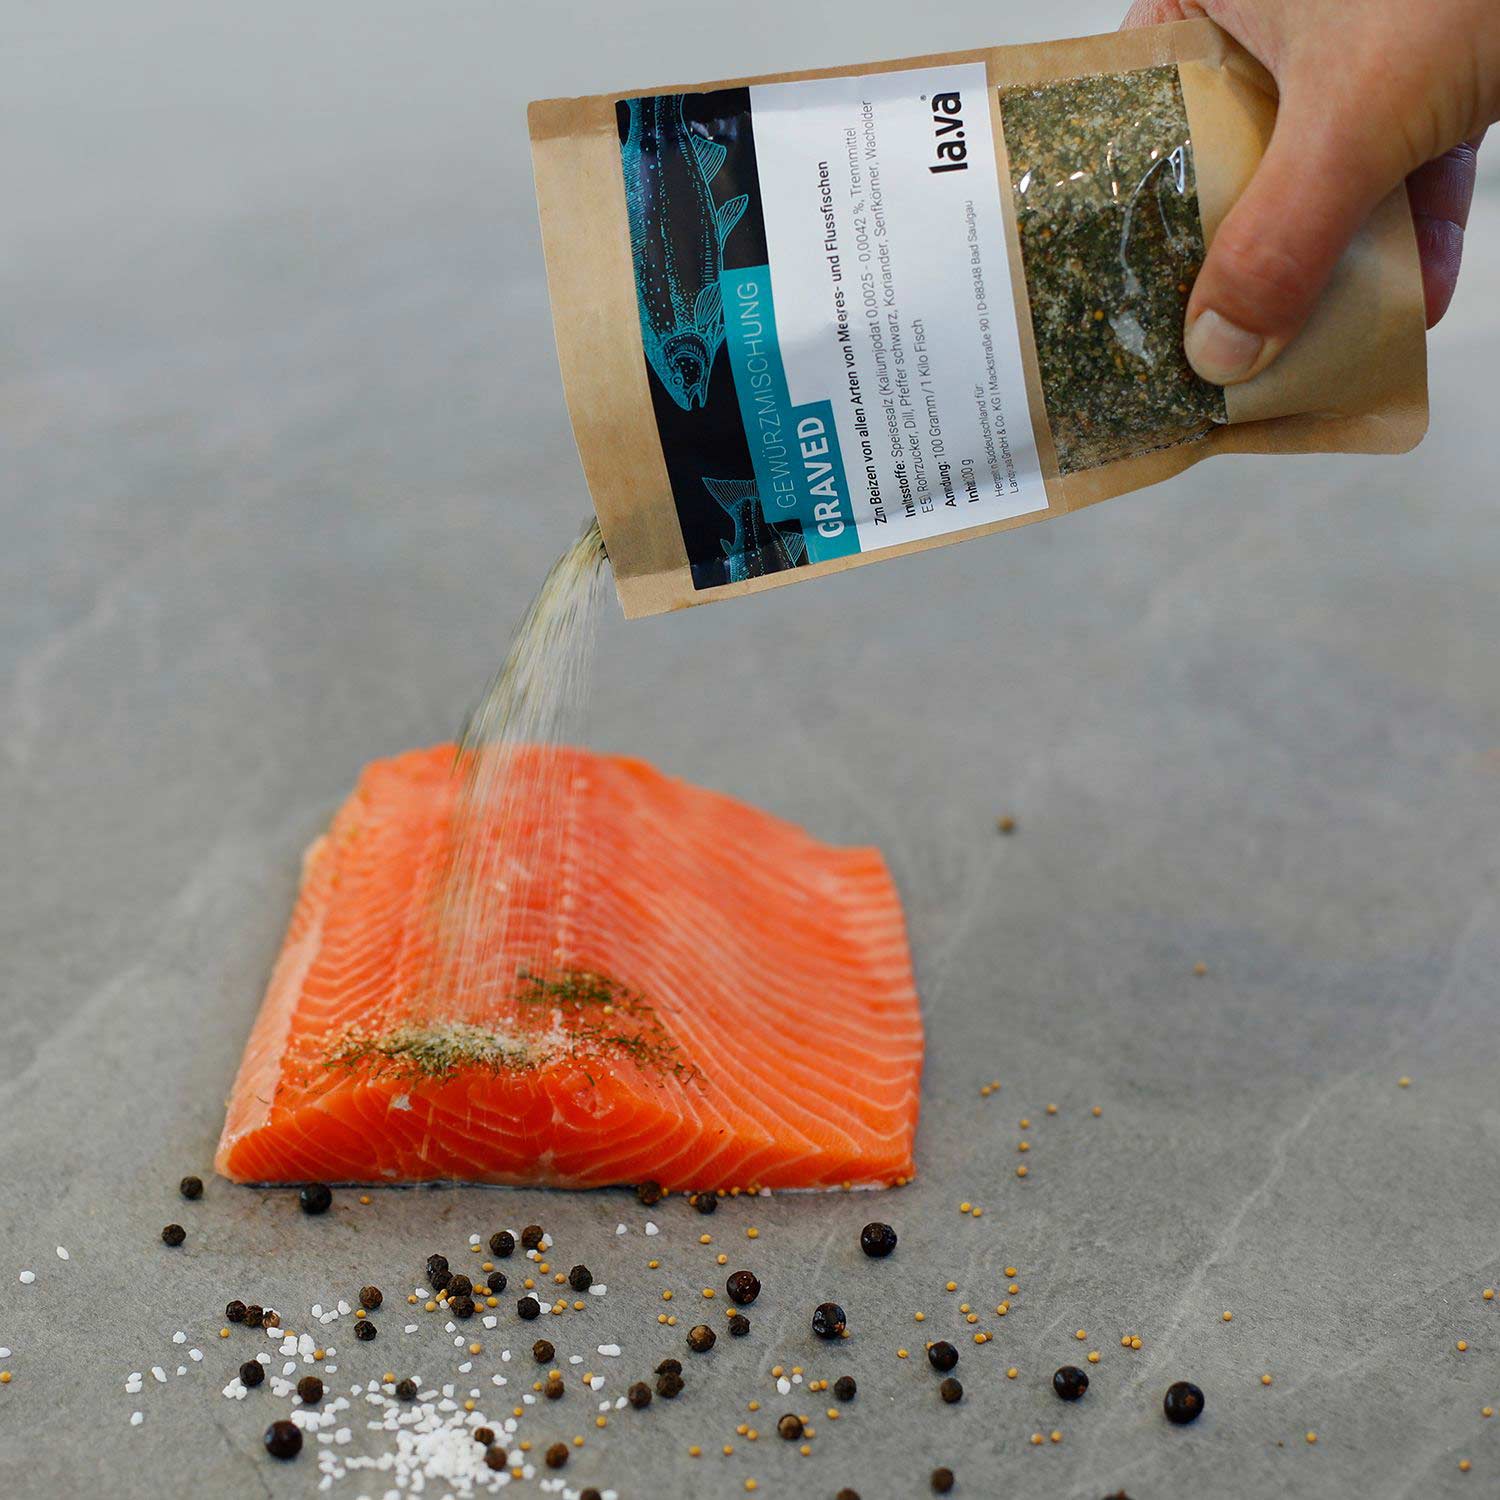 Gravlax seasoning mixture is applied to salmon fillet